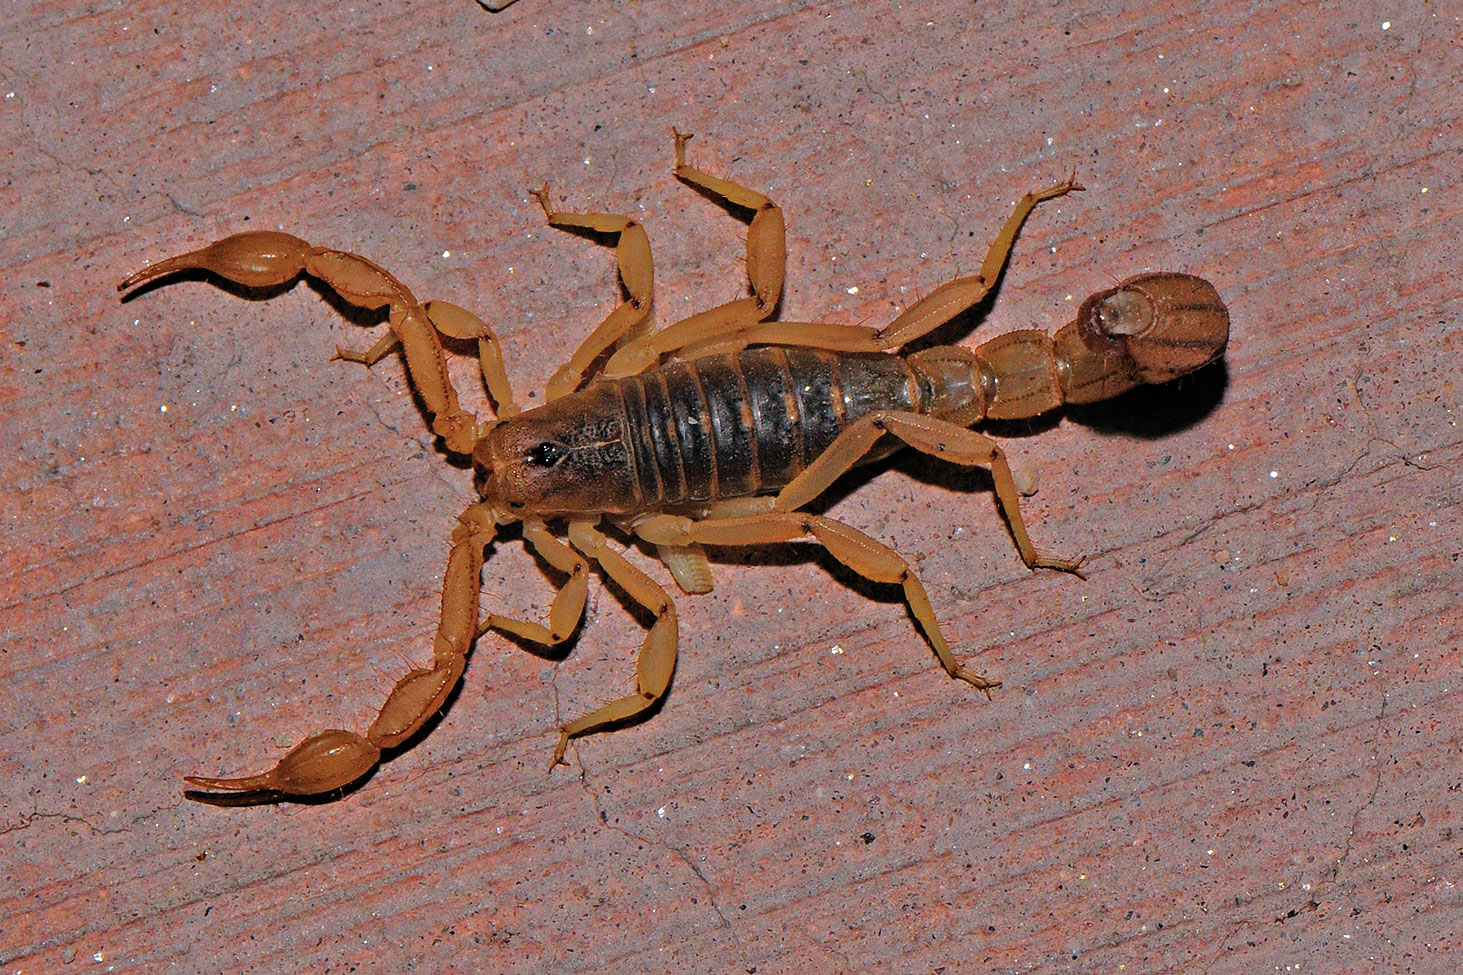 The scorpion; photo by Jerry Schudda